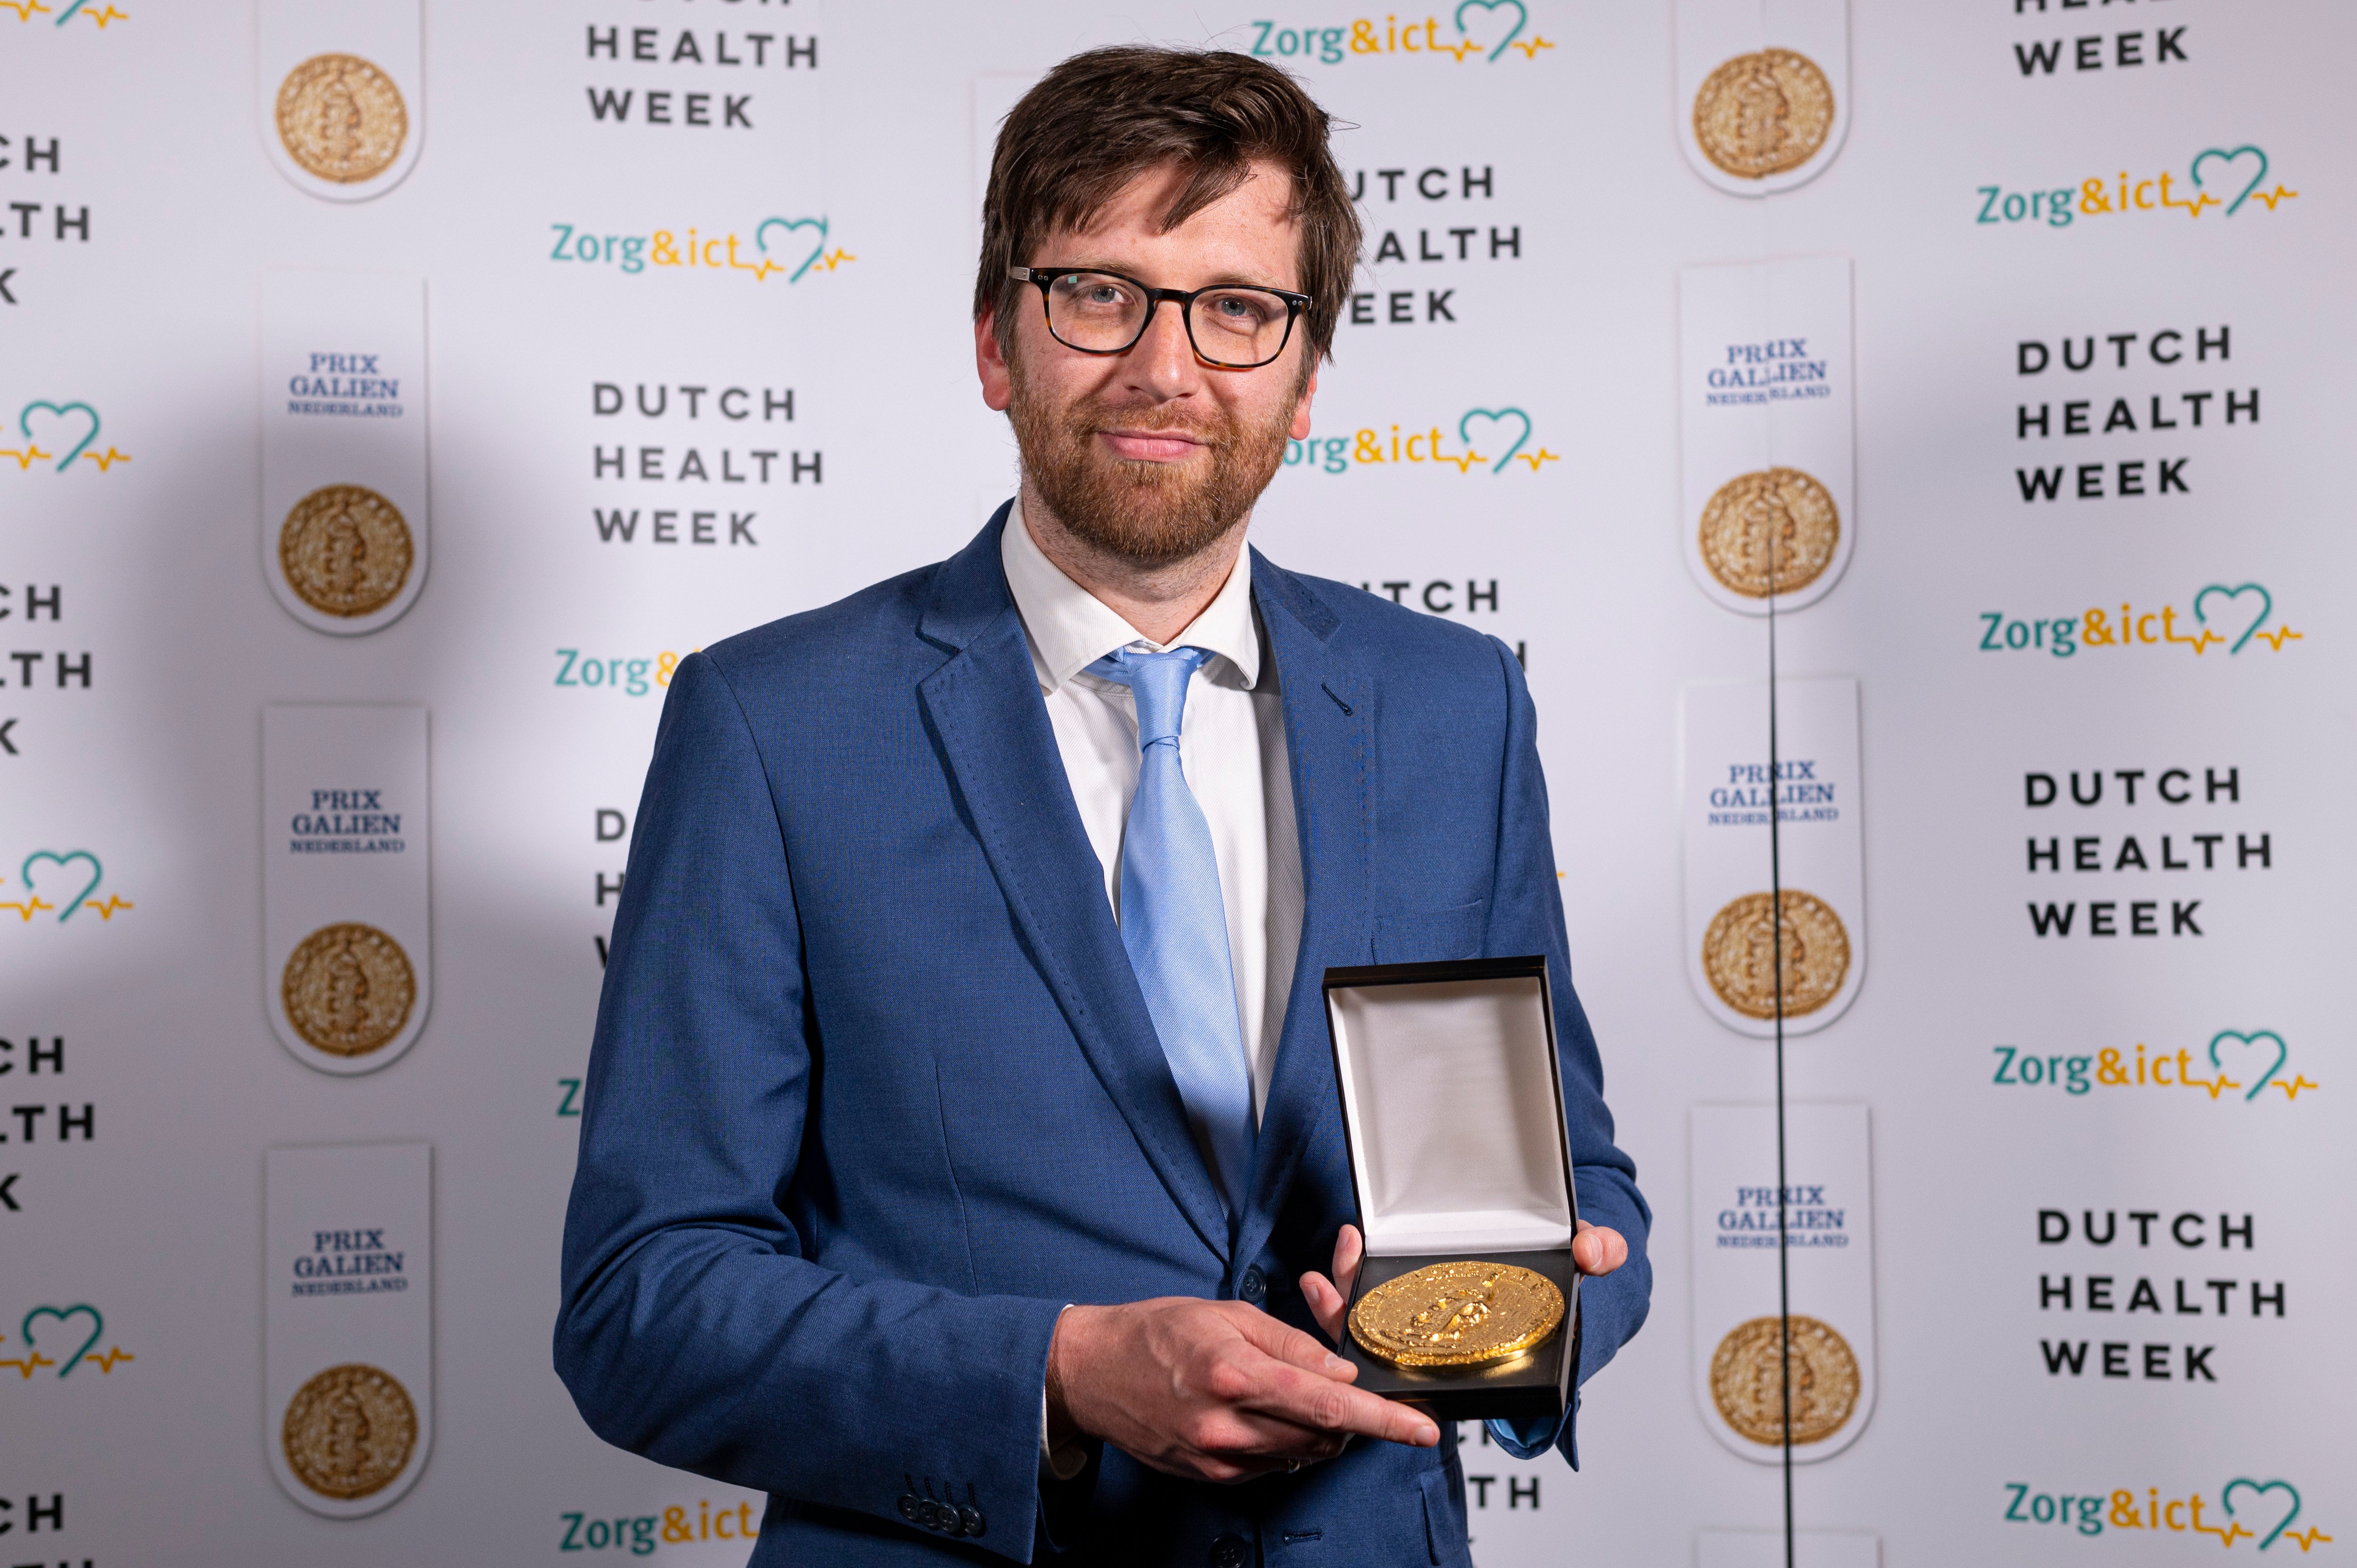 Pieter Vader Prix Galien Research Award